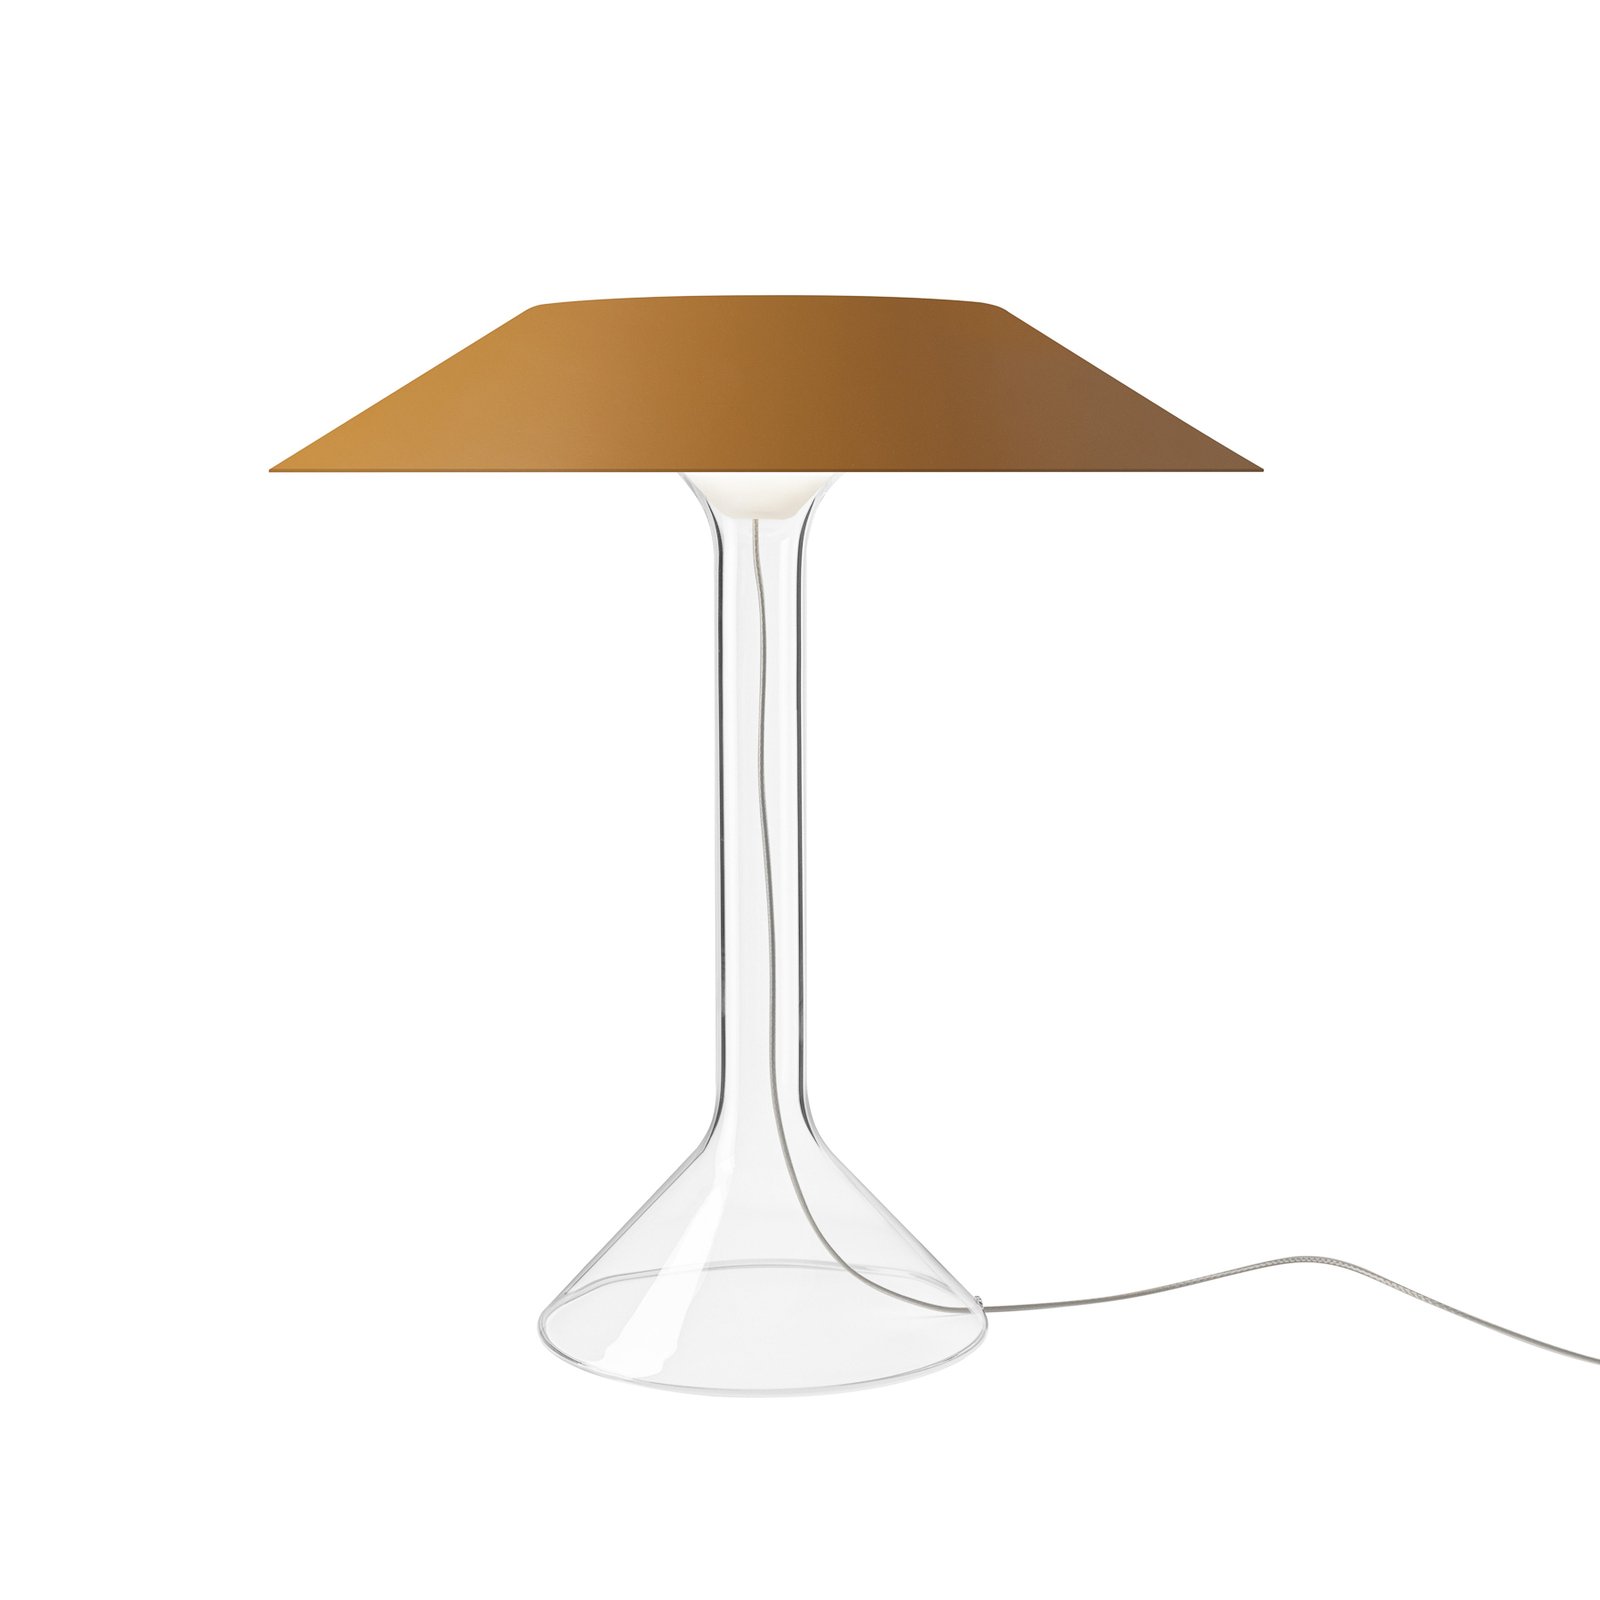 Stolná LED lampa Foscarini Chapeaux M, okrovo žltá